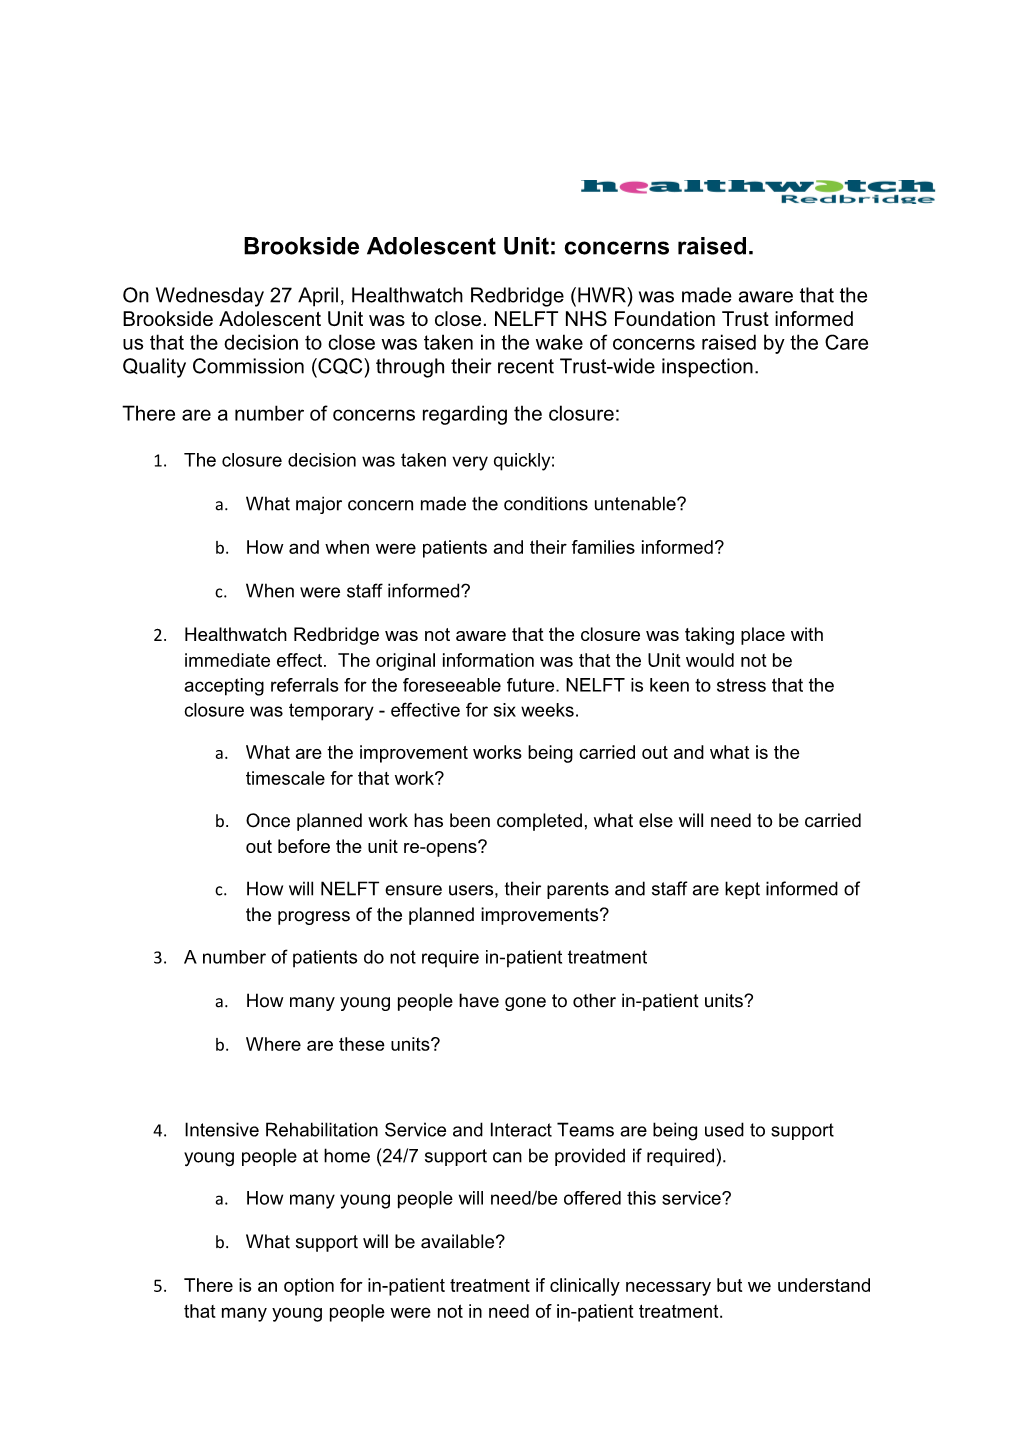 Brookside Adolescent Unit: Concerns Raised